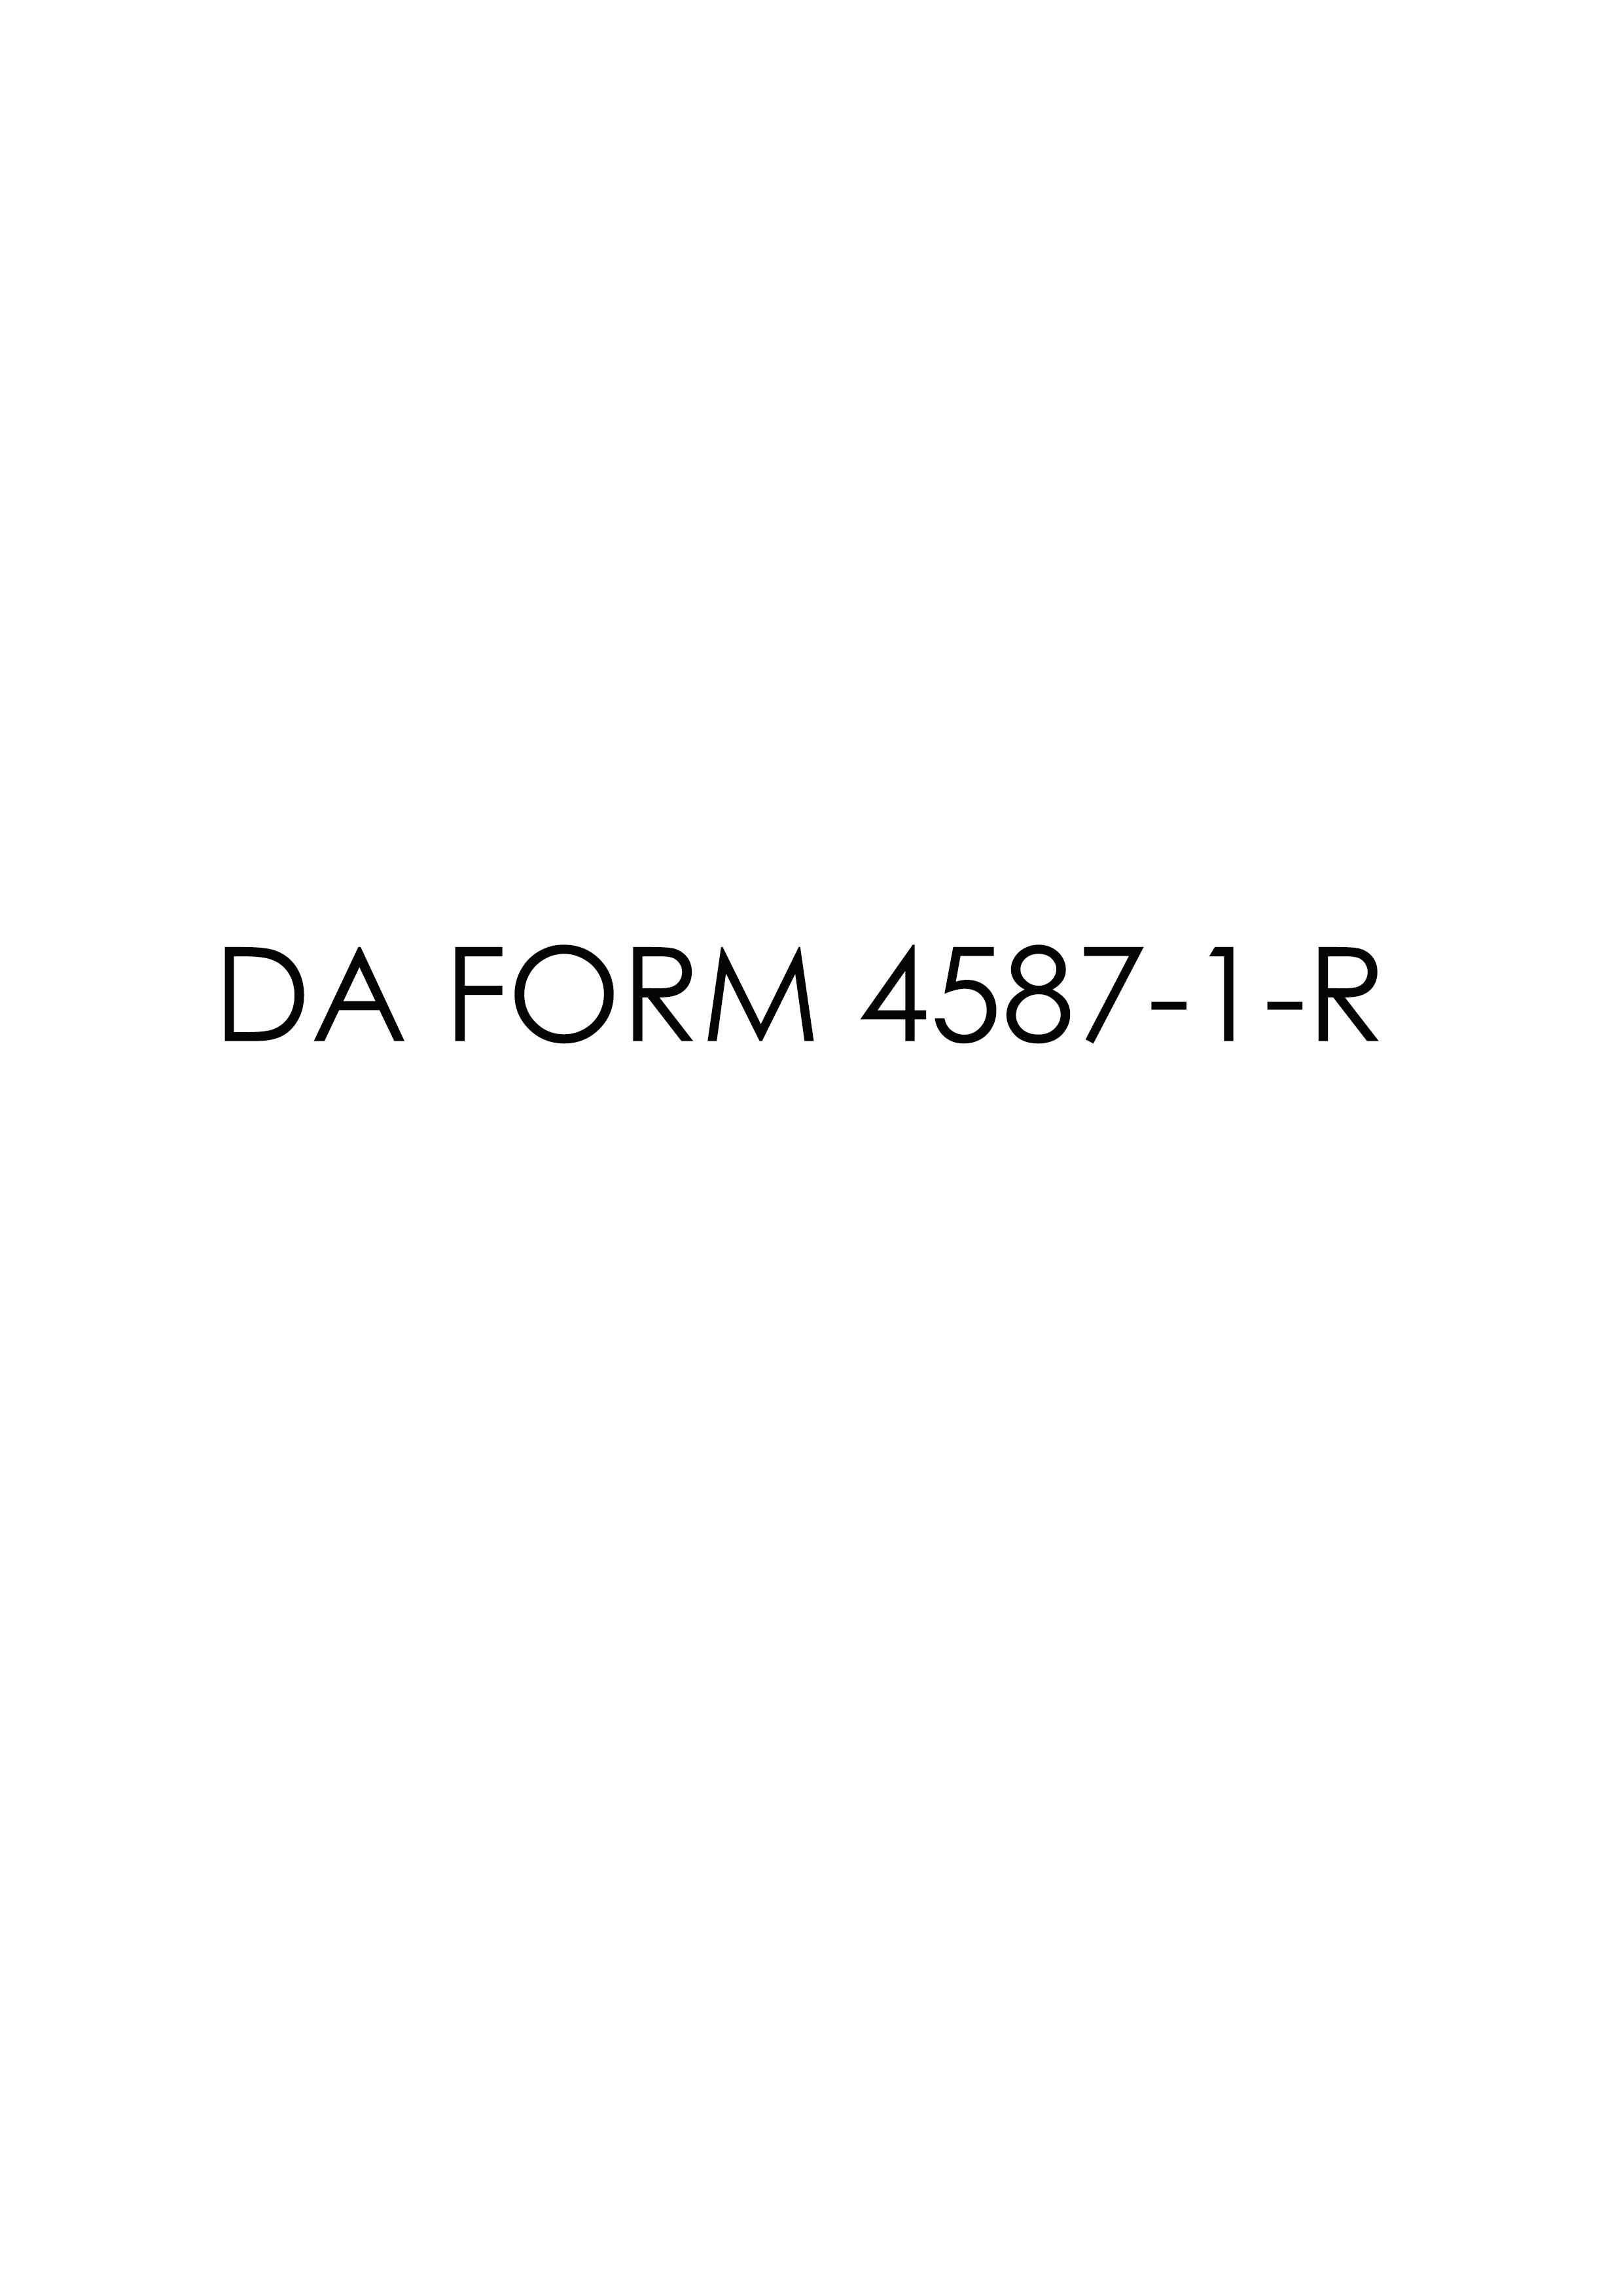 Download Fillable da Form 4587-1-R